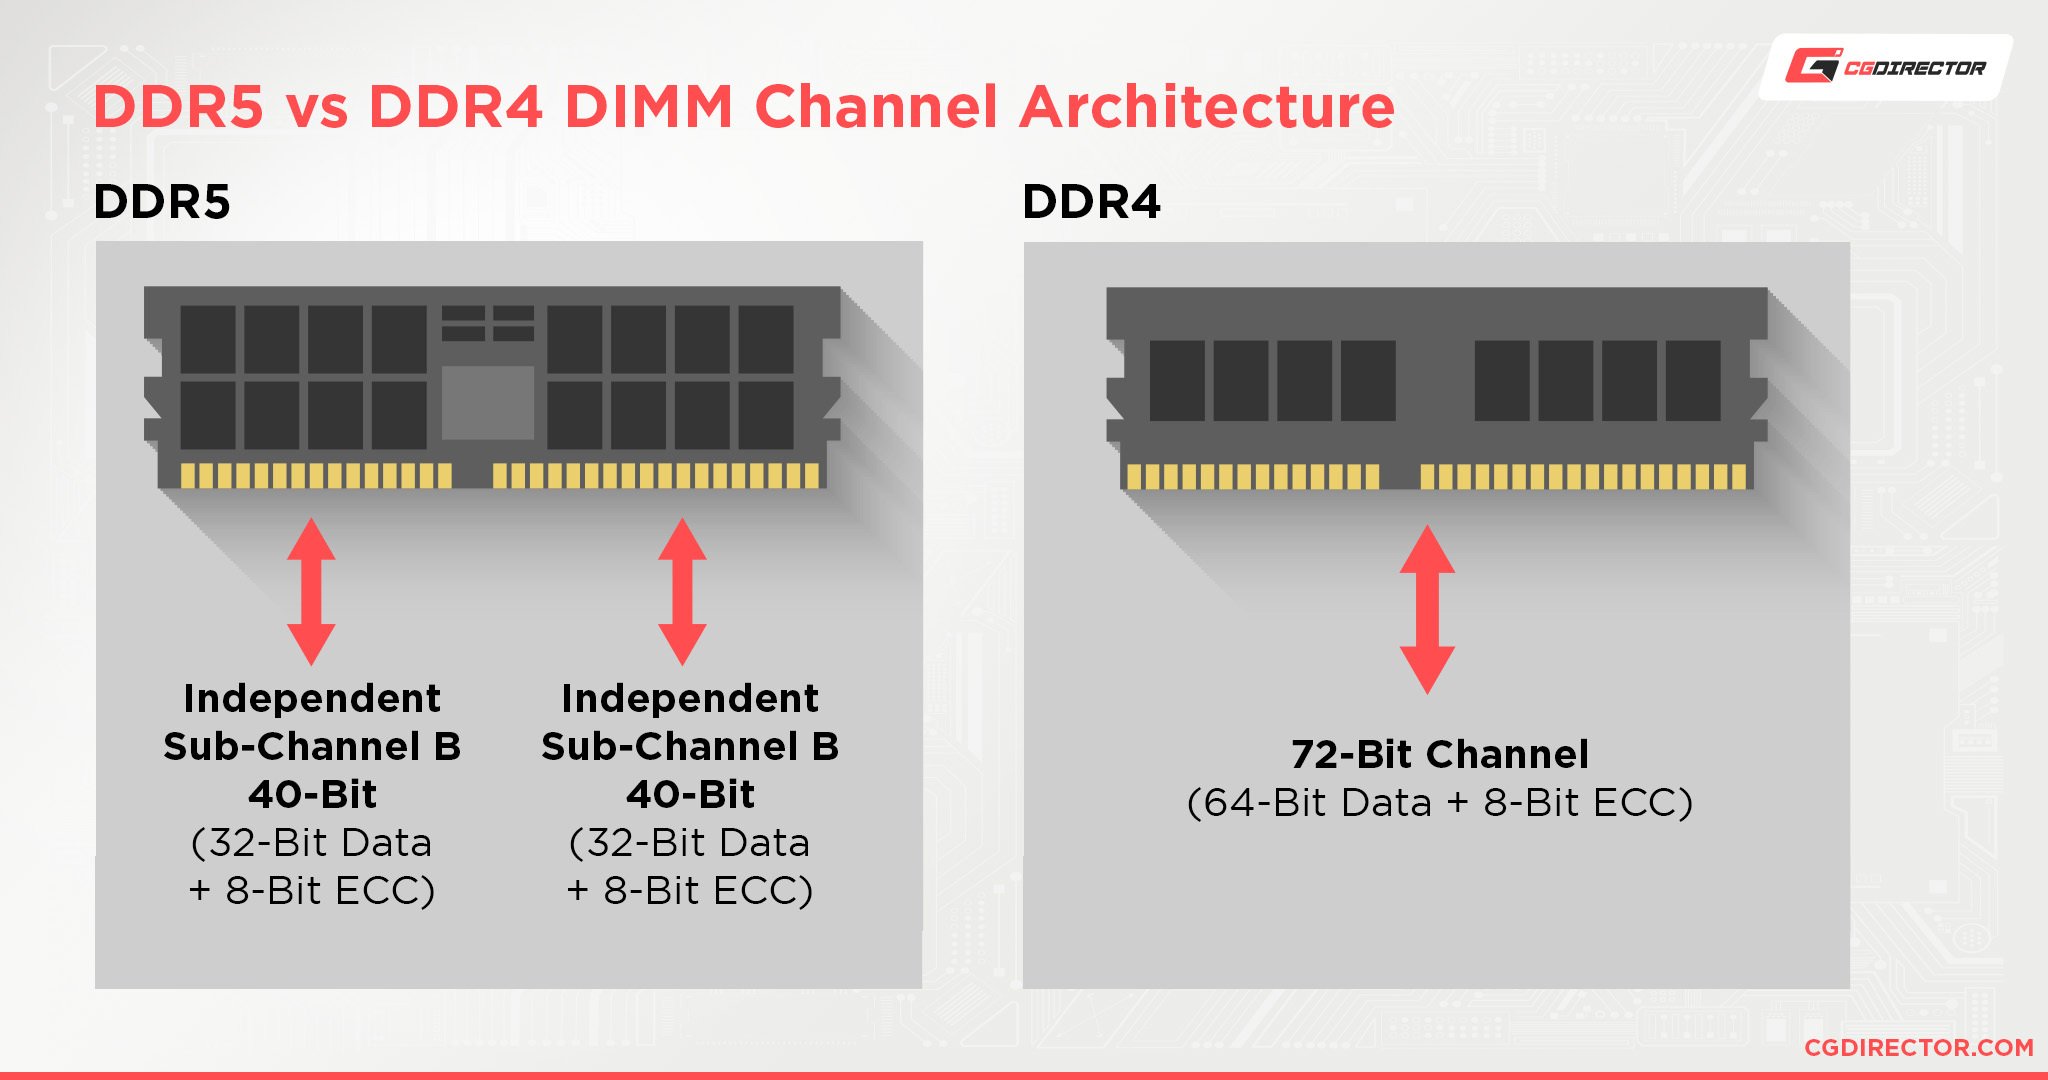 DDR4 vs DDR5 Channel Architecture